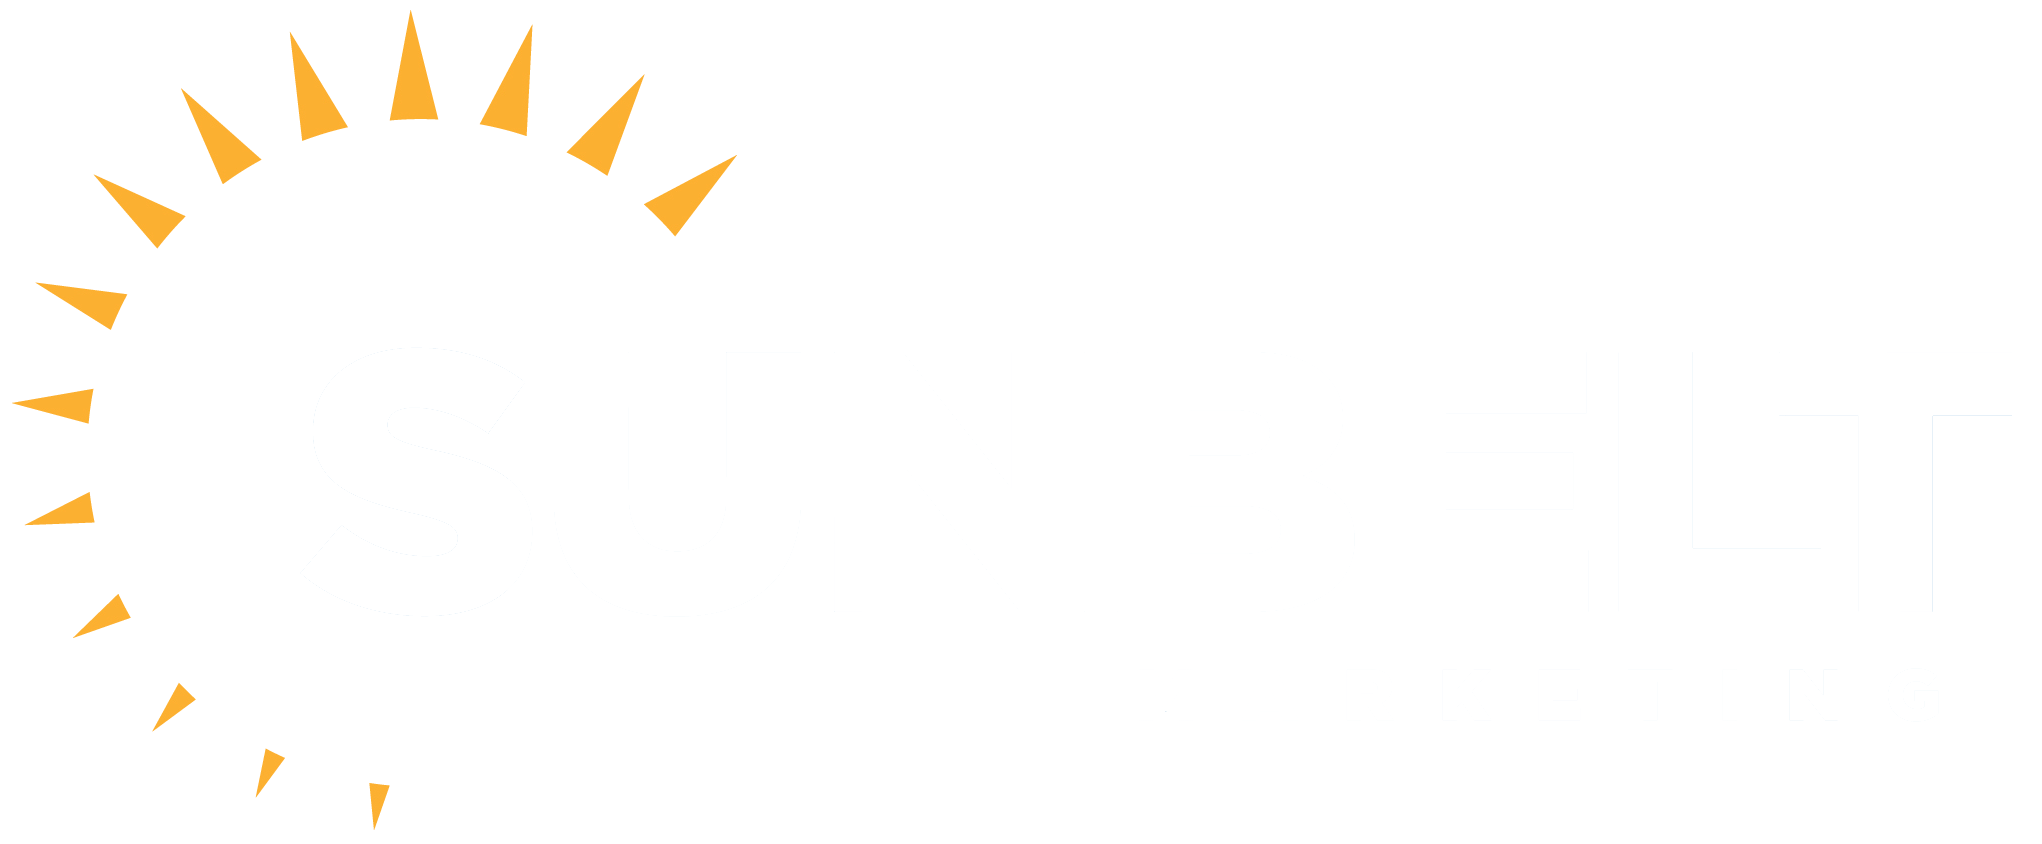 Sunbelt Logo - Sunbelt Marketing Inc.